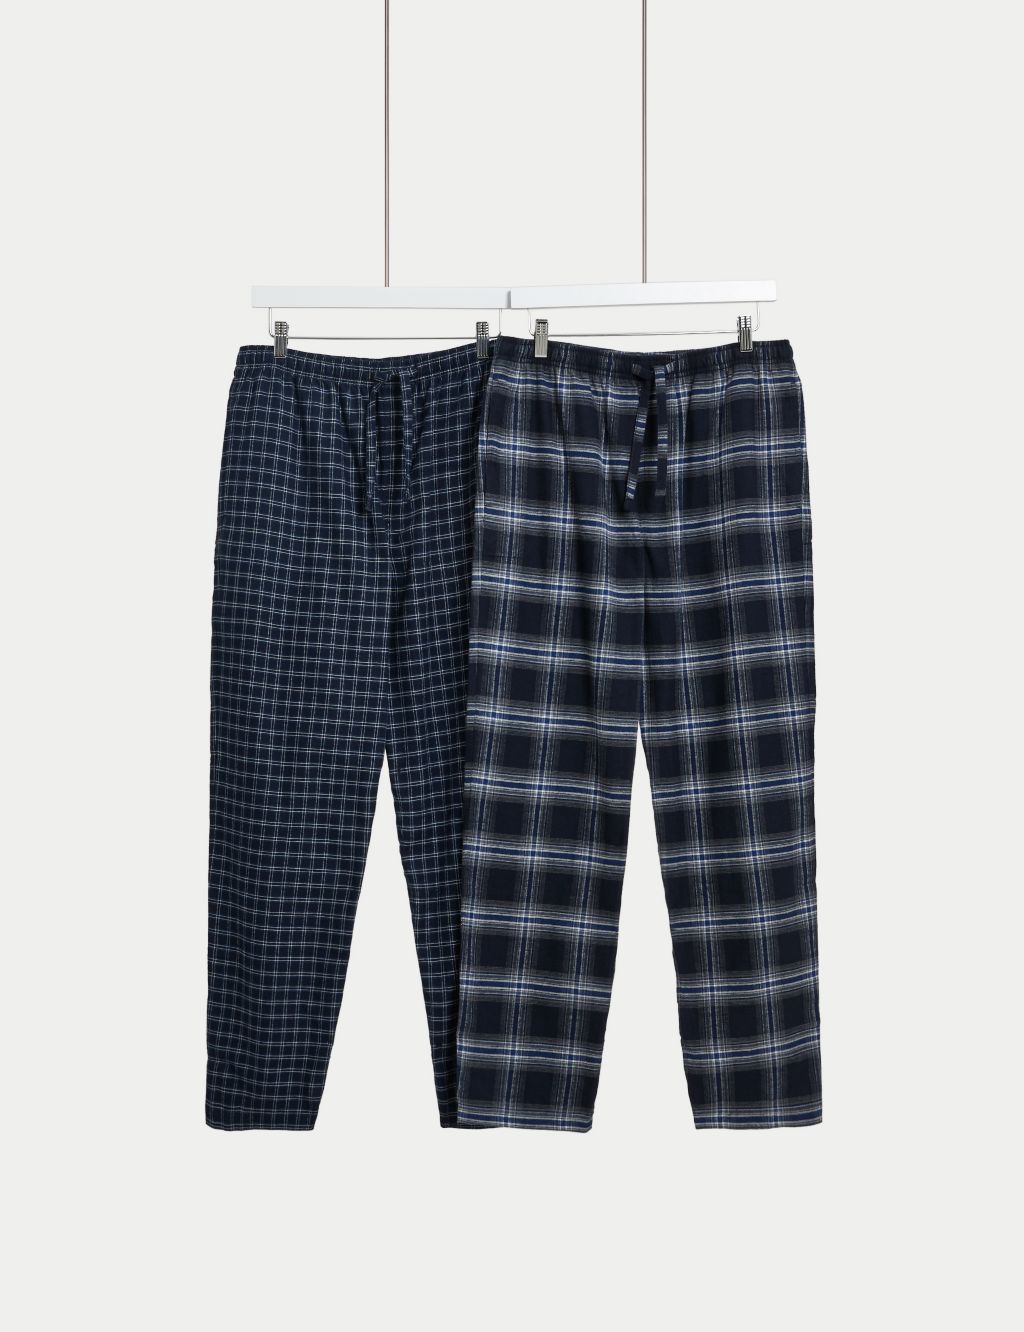 Men’s Pyjamas | Pyjamas for Men | M&S